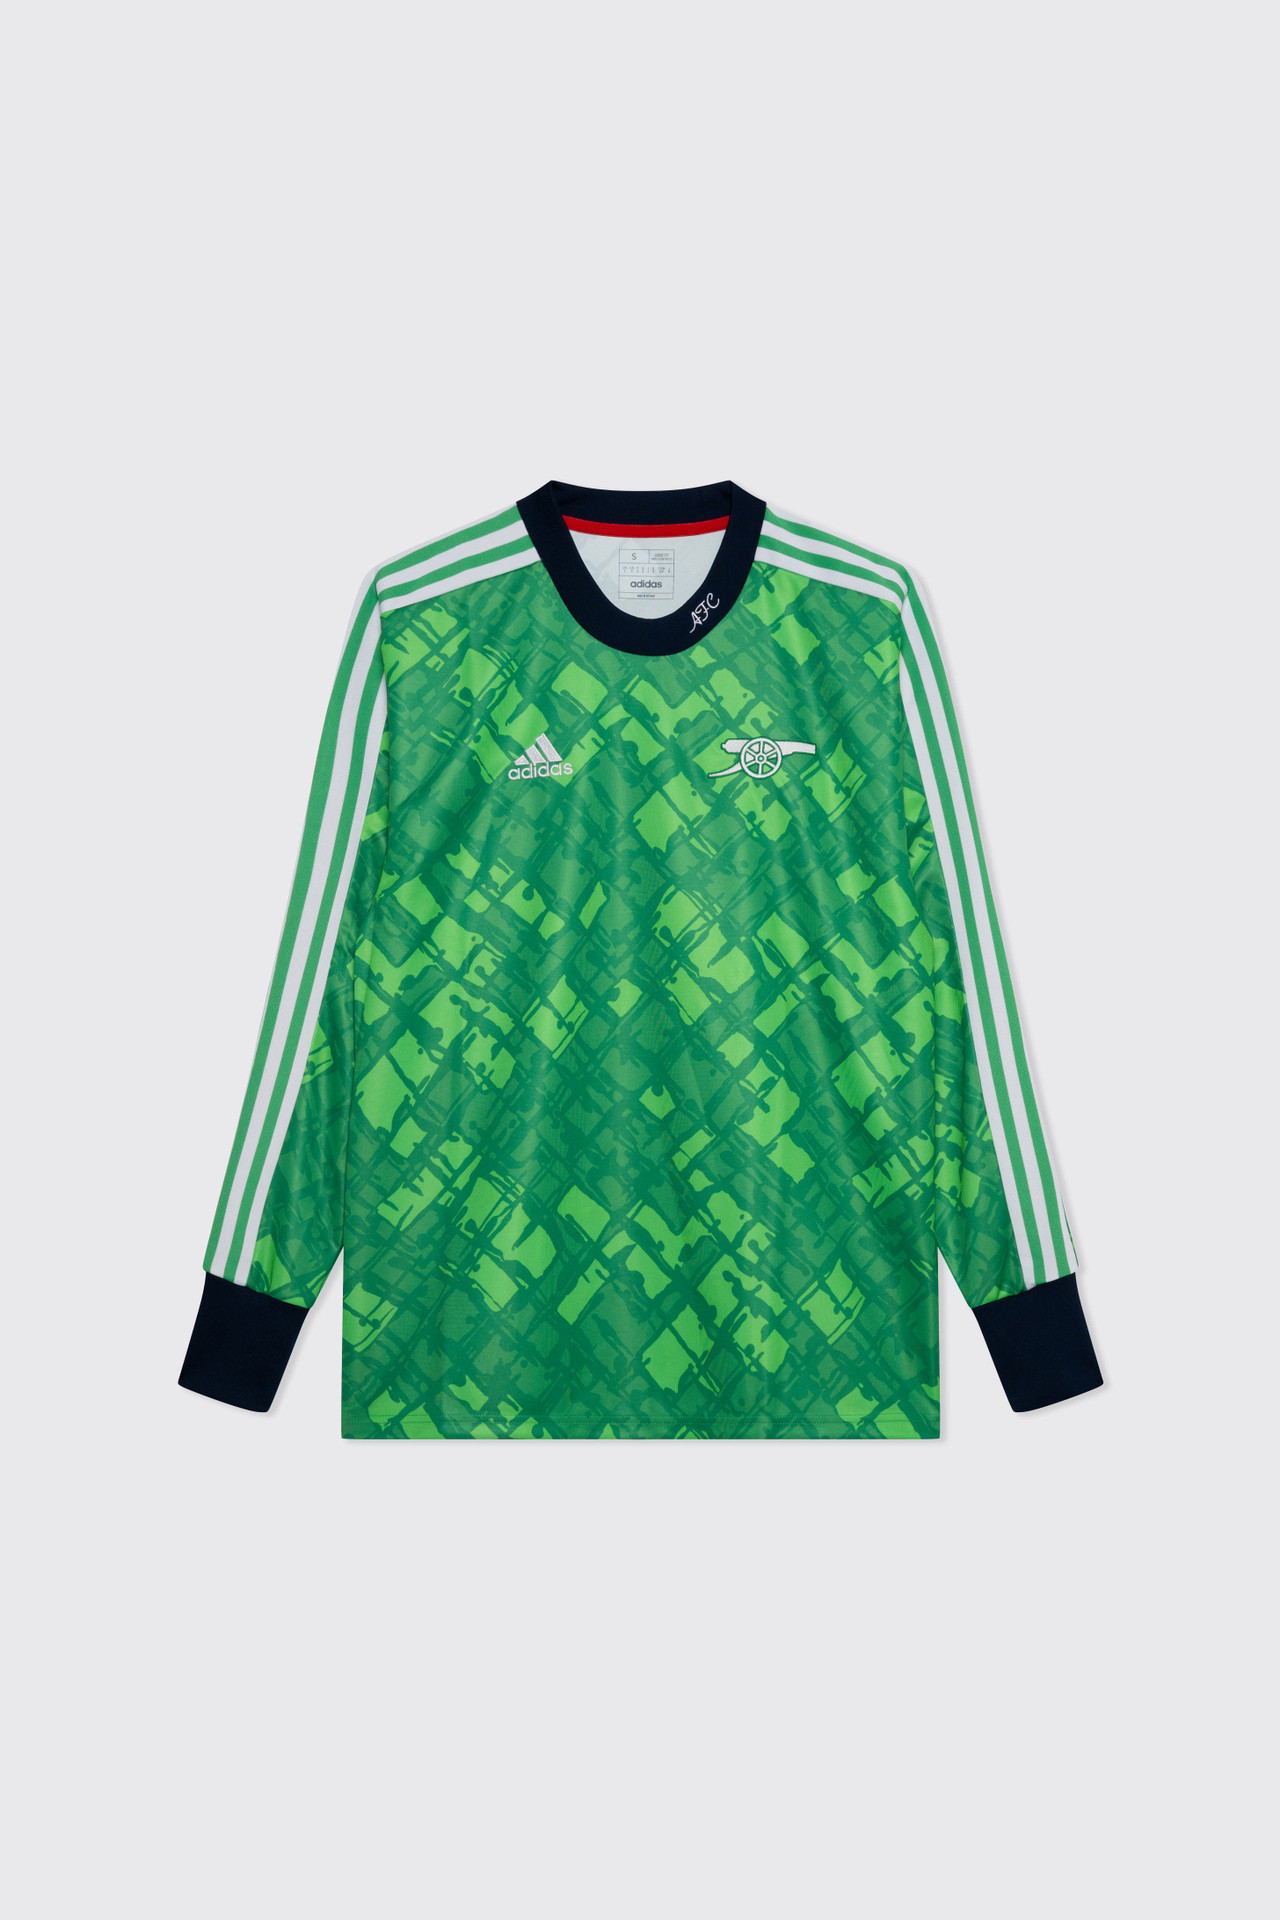 adidas Originals Manchester United Goalkeeper Jersey - 1990